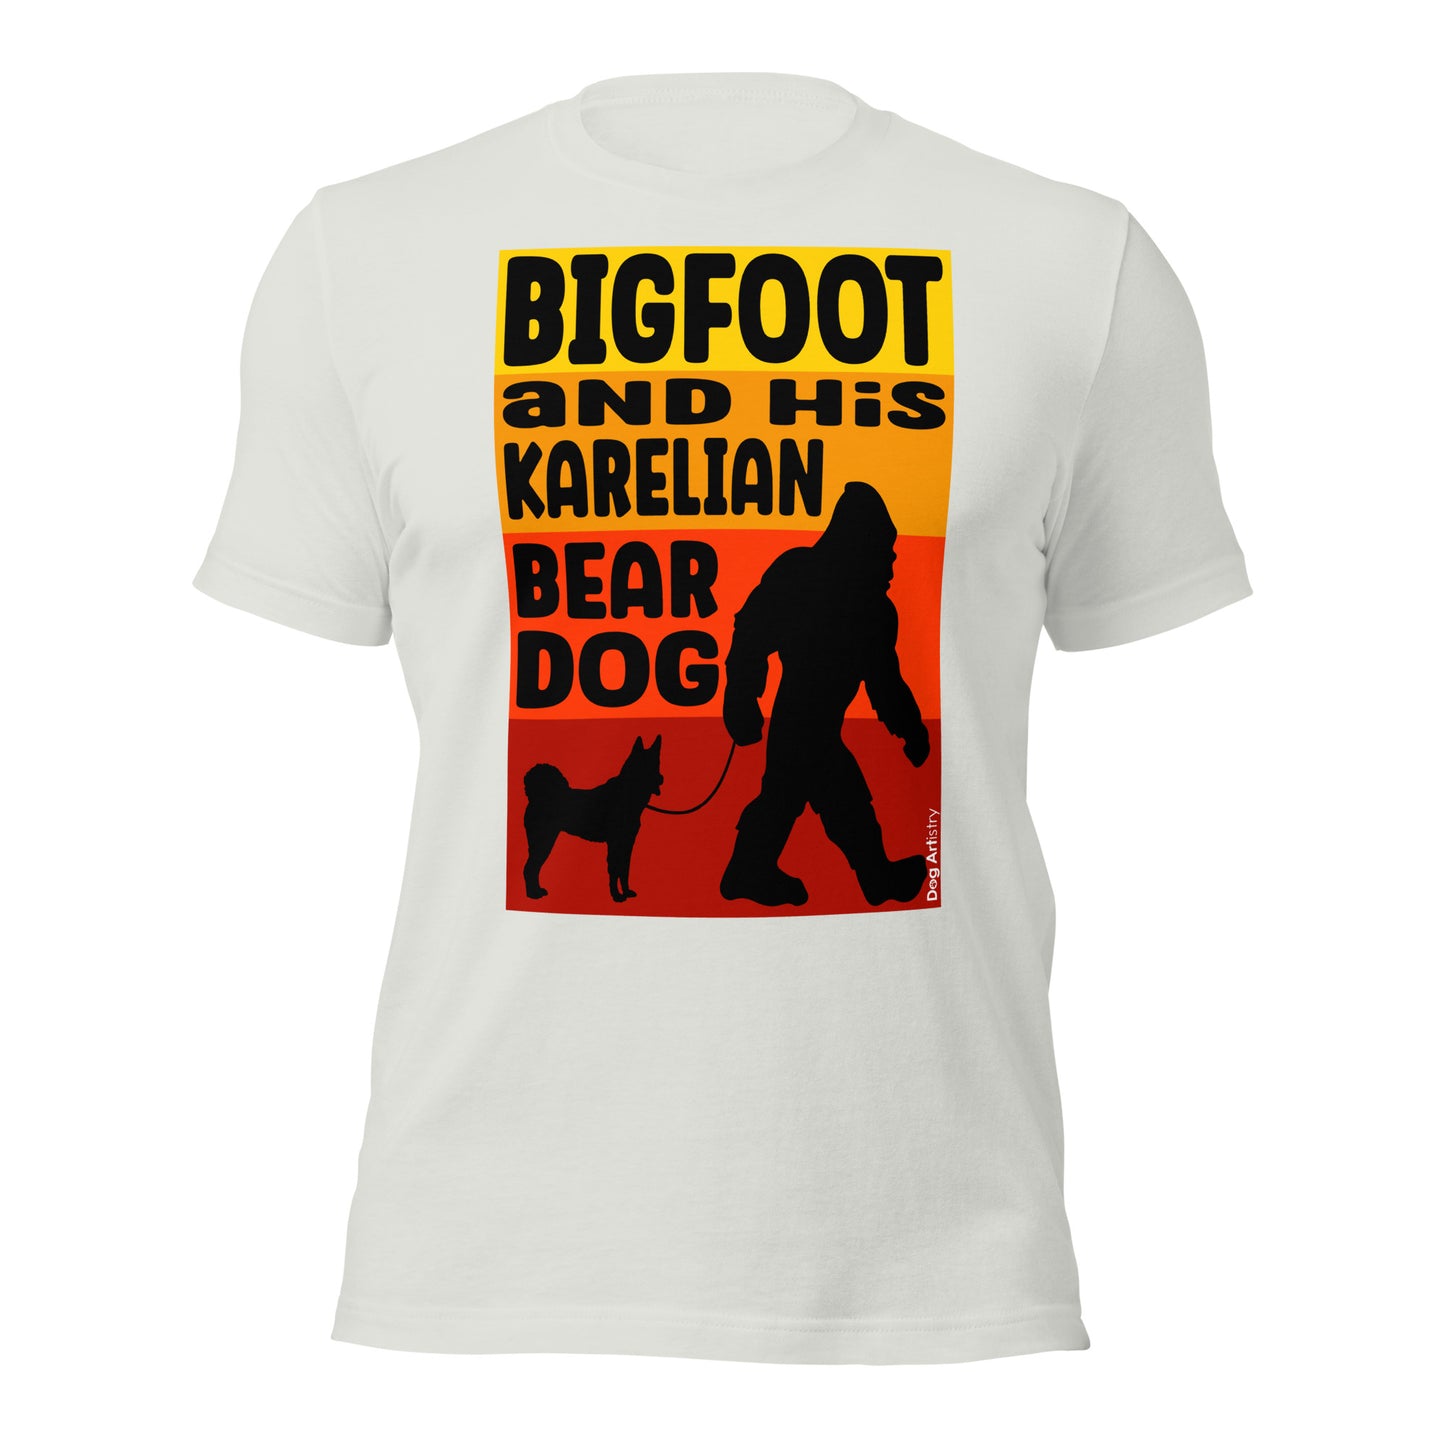 Bigfoot and his Karelian bear dog unisex silver t-shirt by Dog Artistry.